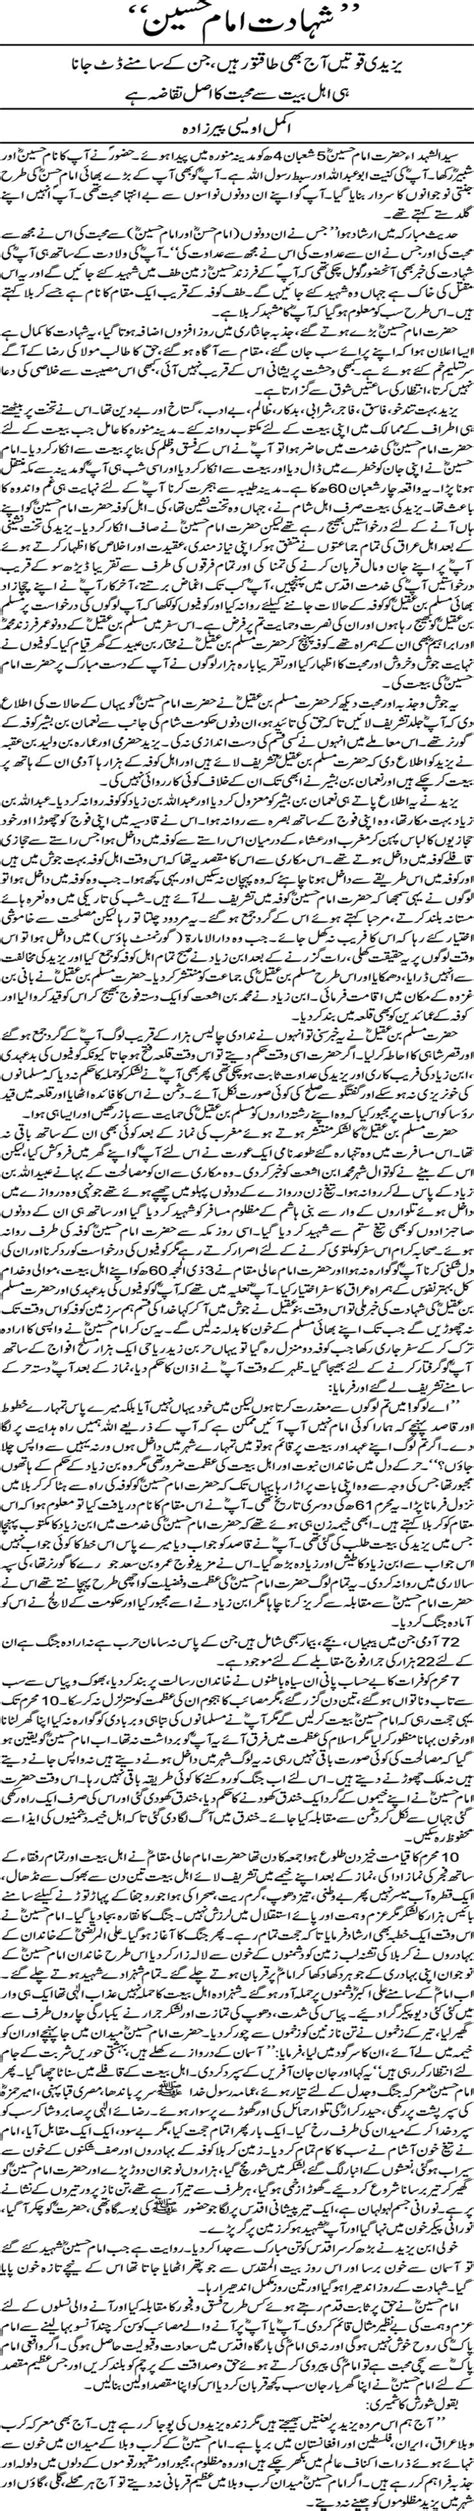 History Of Th Muharram Youm E Ashura And Waqia Karbala In Urdu